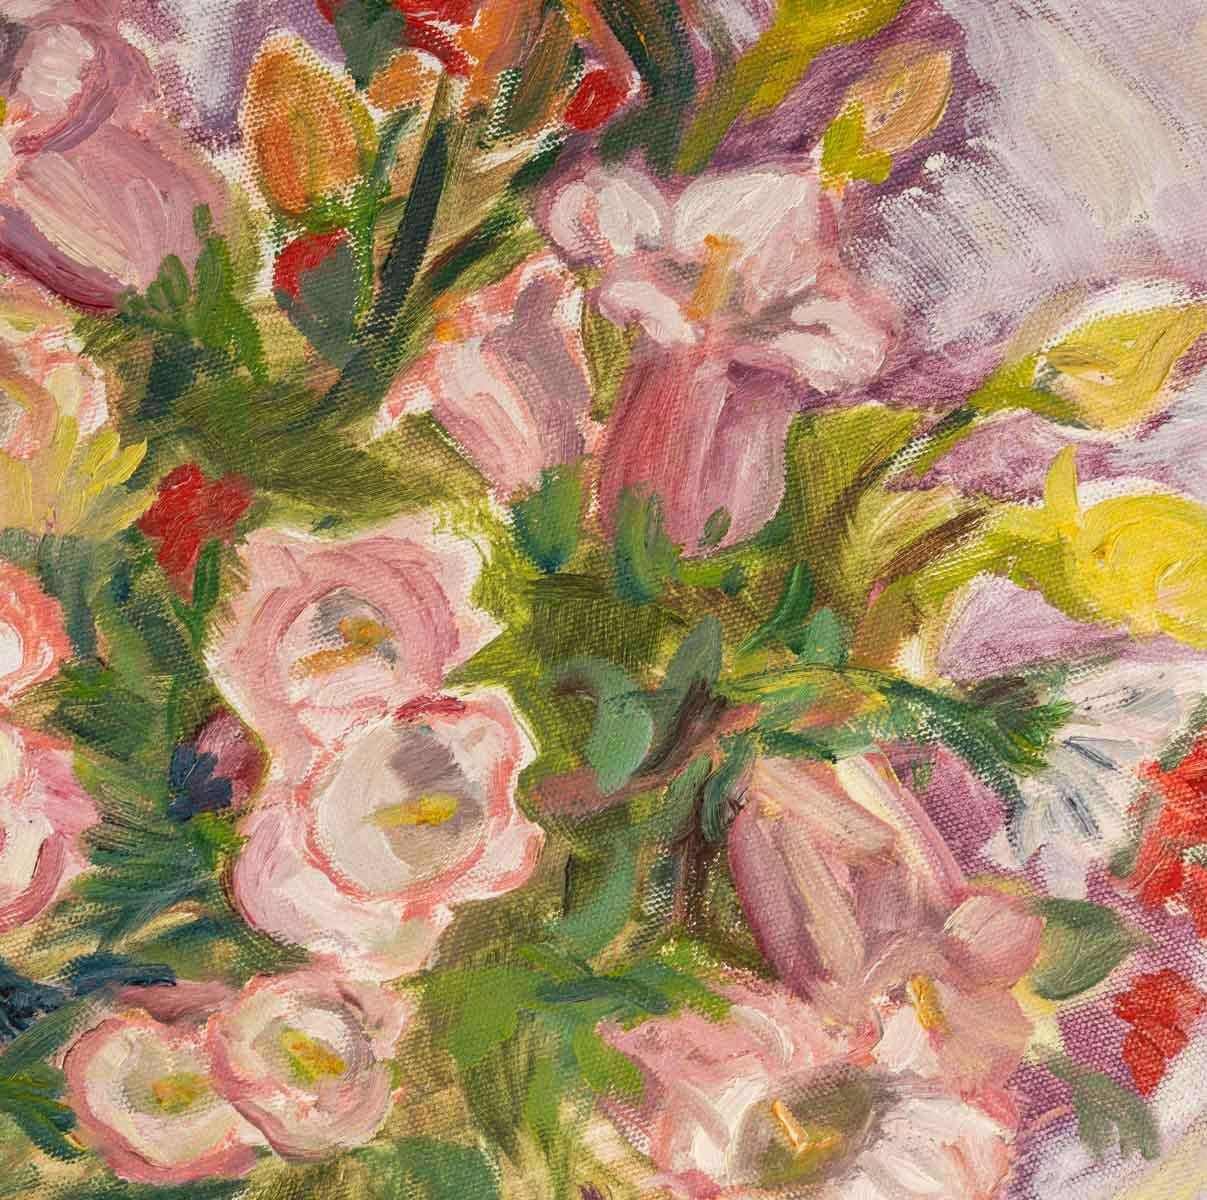 Bouquet of flowers
Painting on round canvas, 20th century.
Measures: D: 40 cm, D: 2 cm.